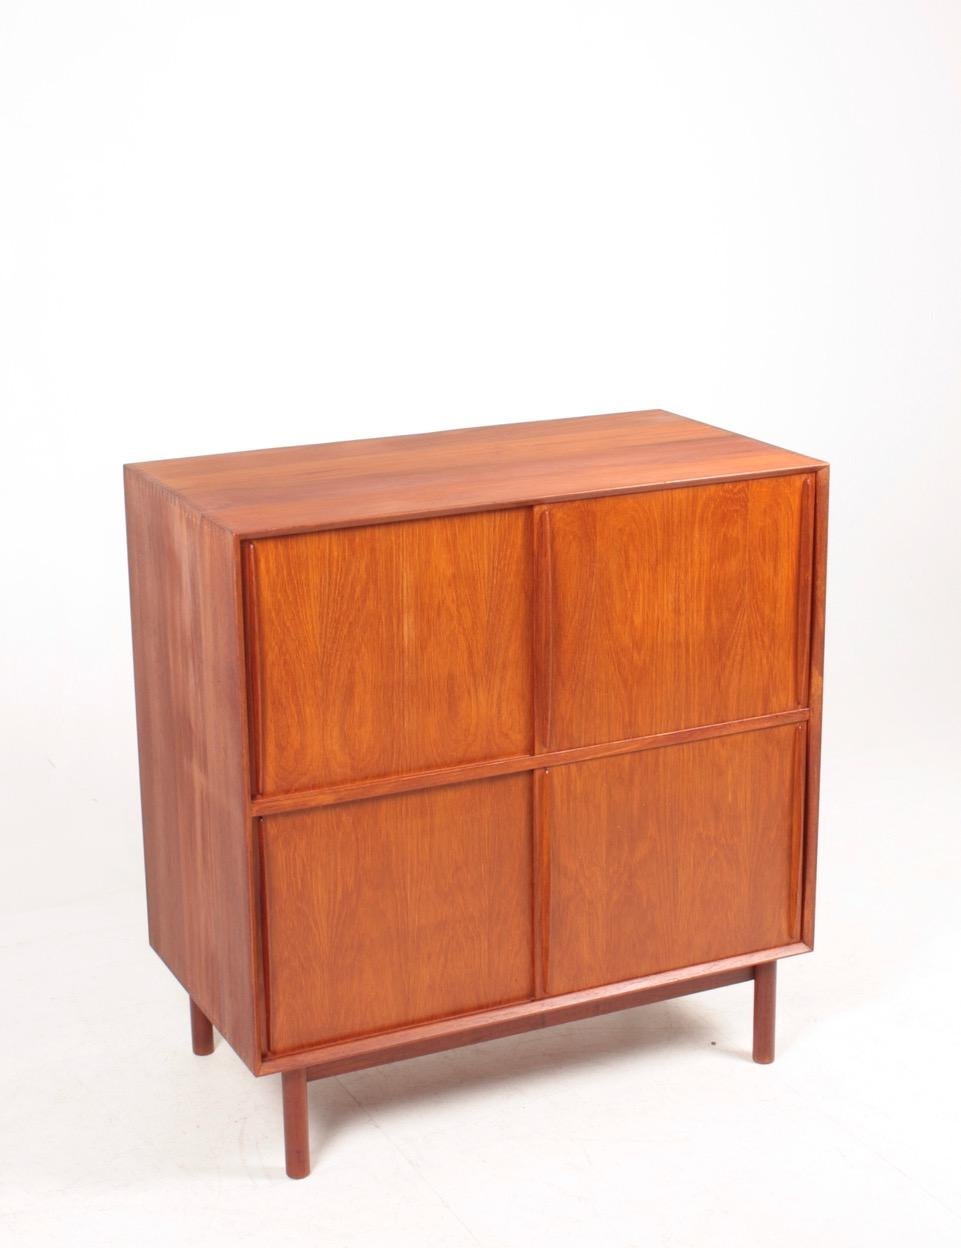 Scandinavian Modern Midcentury Cabinet in Solid Teak Designed by Hvidt & Mølgaard, 1950s